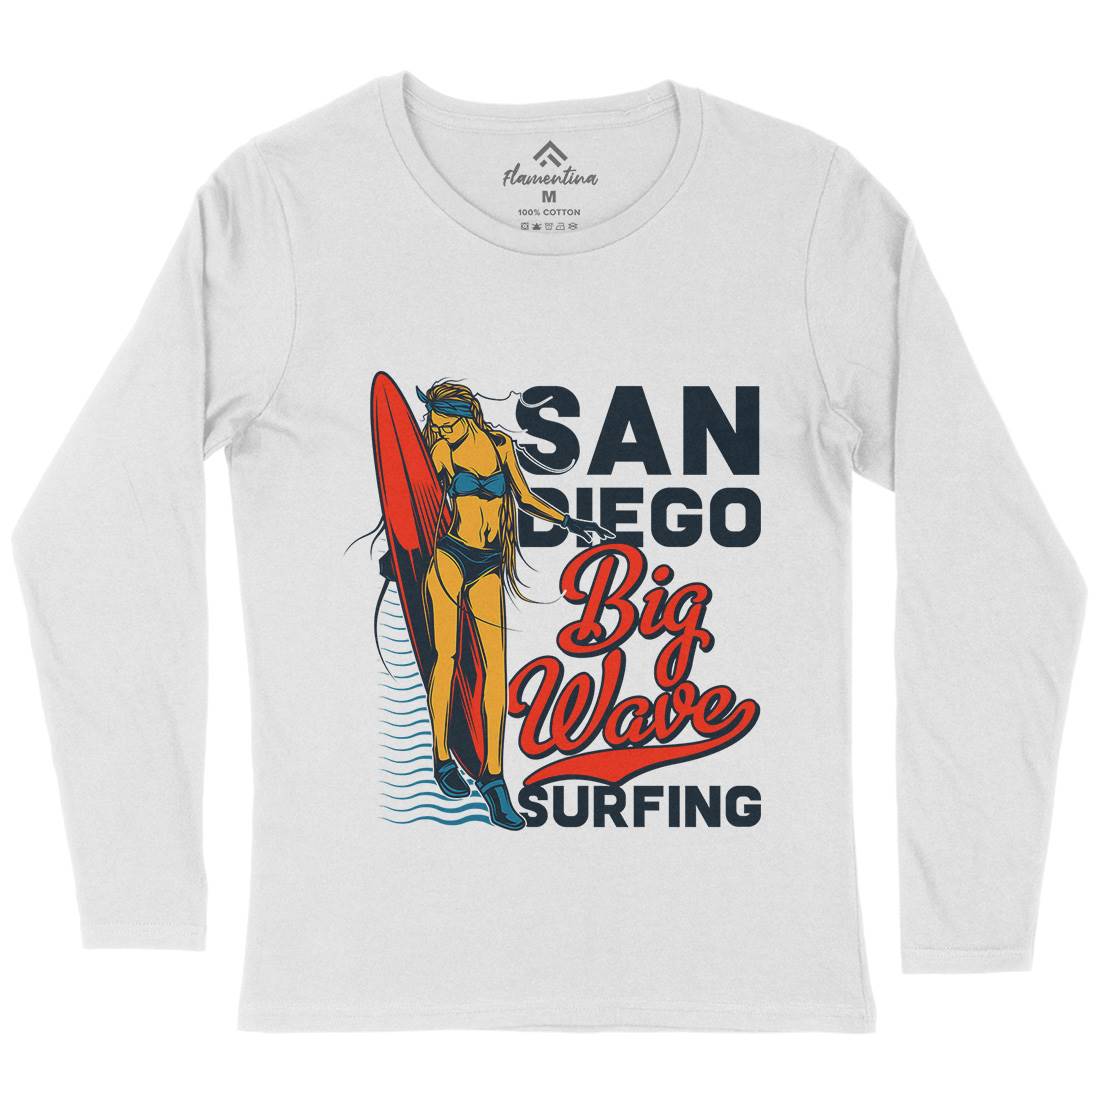 Big Wave Surfing Womens Long Sleeve T-Shirt Surf B879